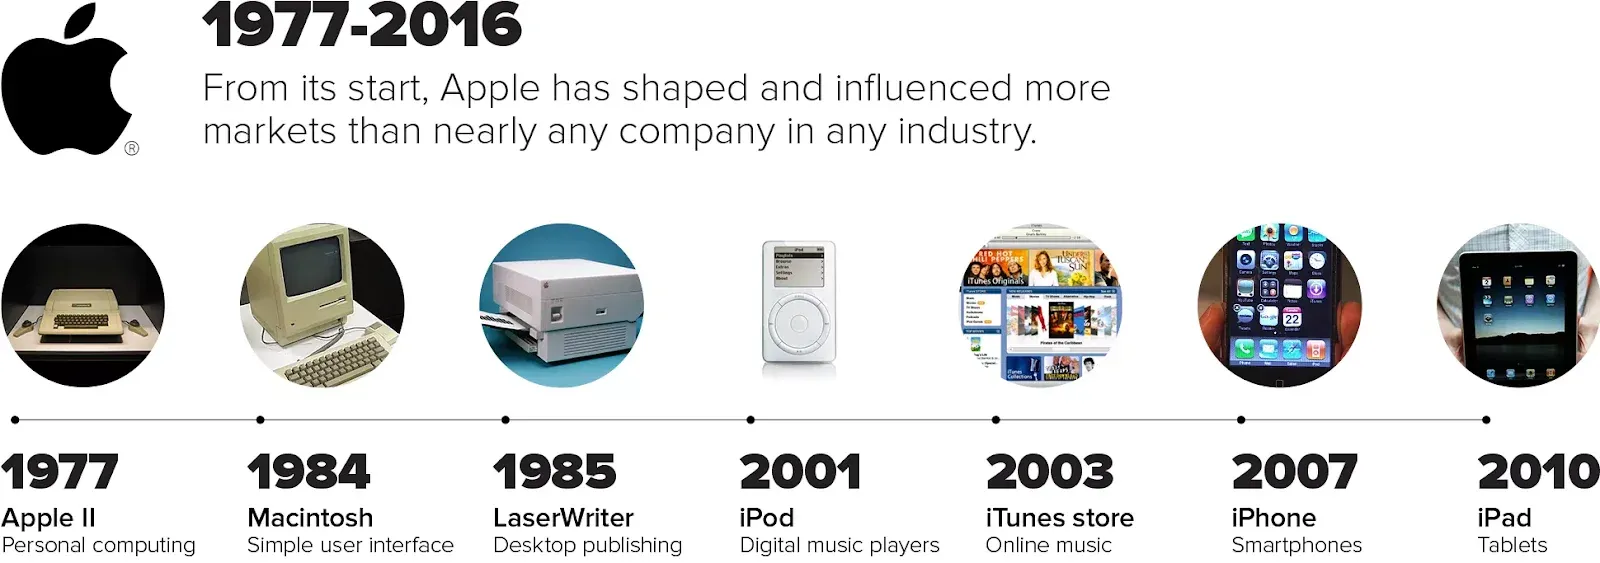 Garis masa inovasi Apple | Sumber: cnet.com